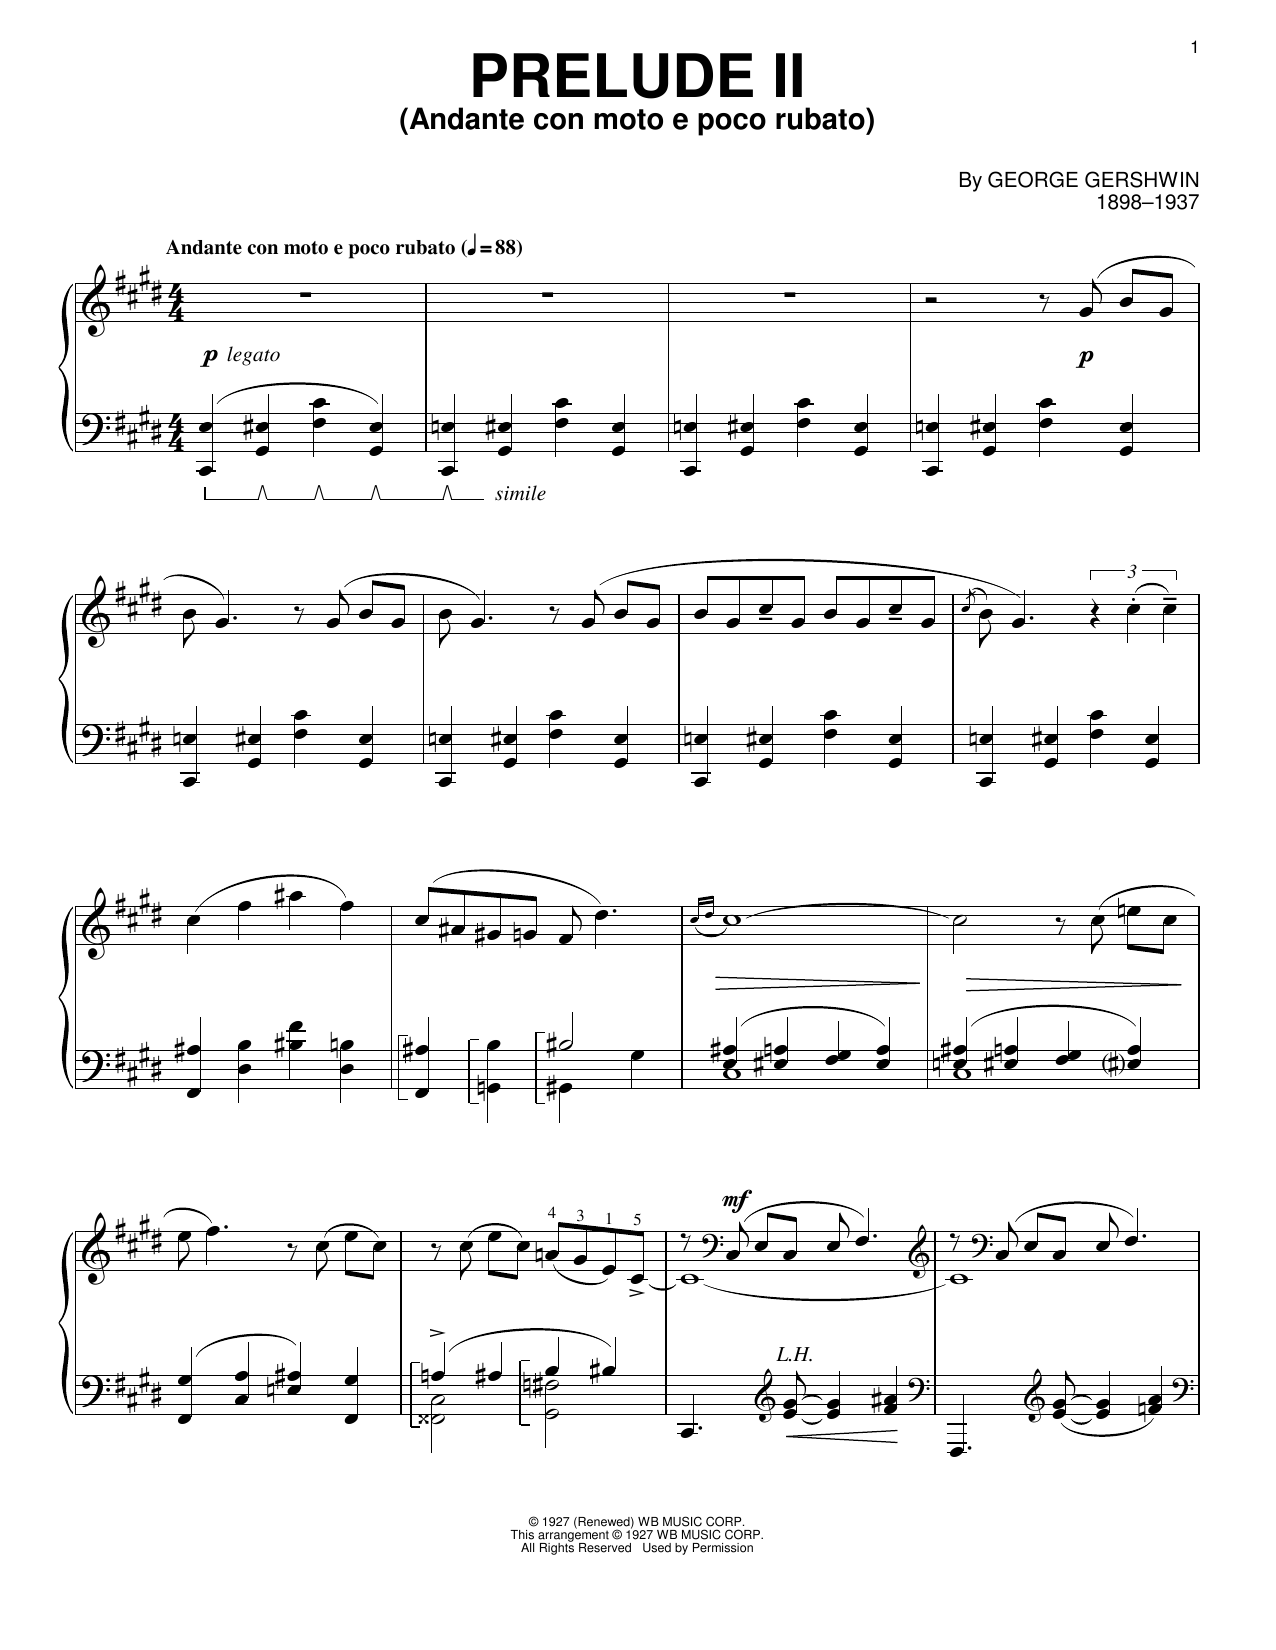 George Gershwin Prelude II (Andante Con Moto E Poco Rubato) Sheet Music Notes & Chords for Clarinet and Piano - Download or Print PDF